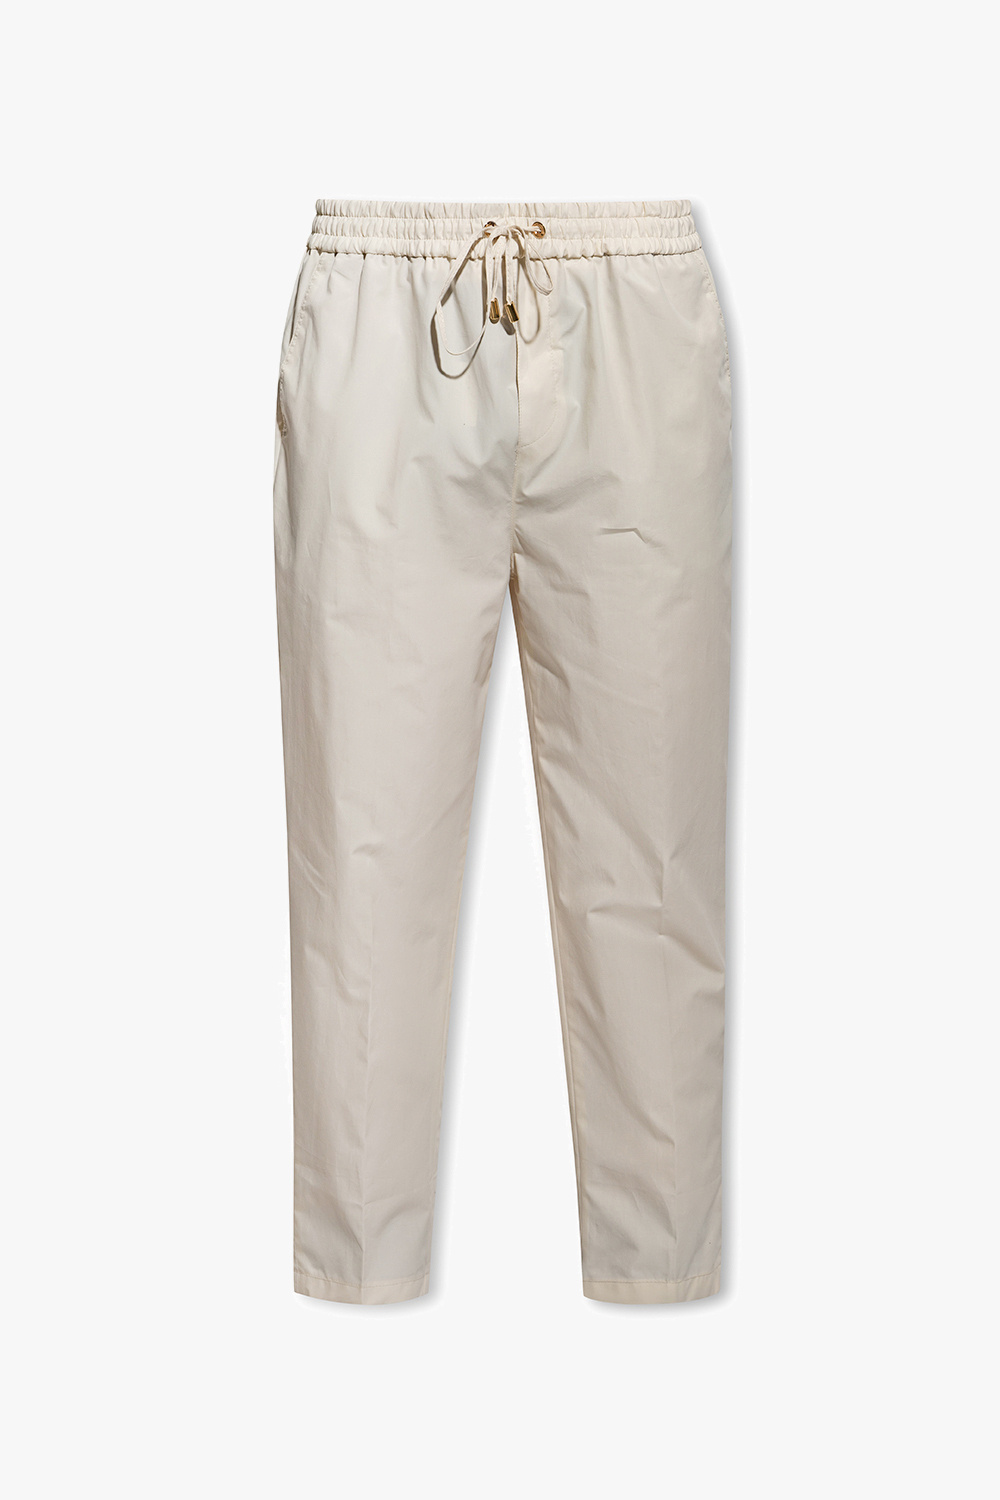 Etro Cotton van trousers